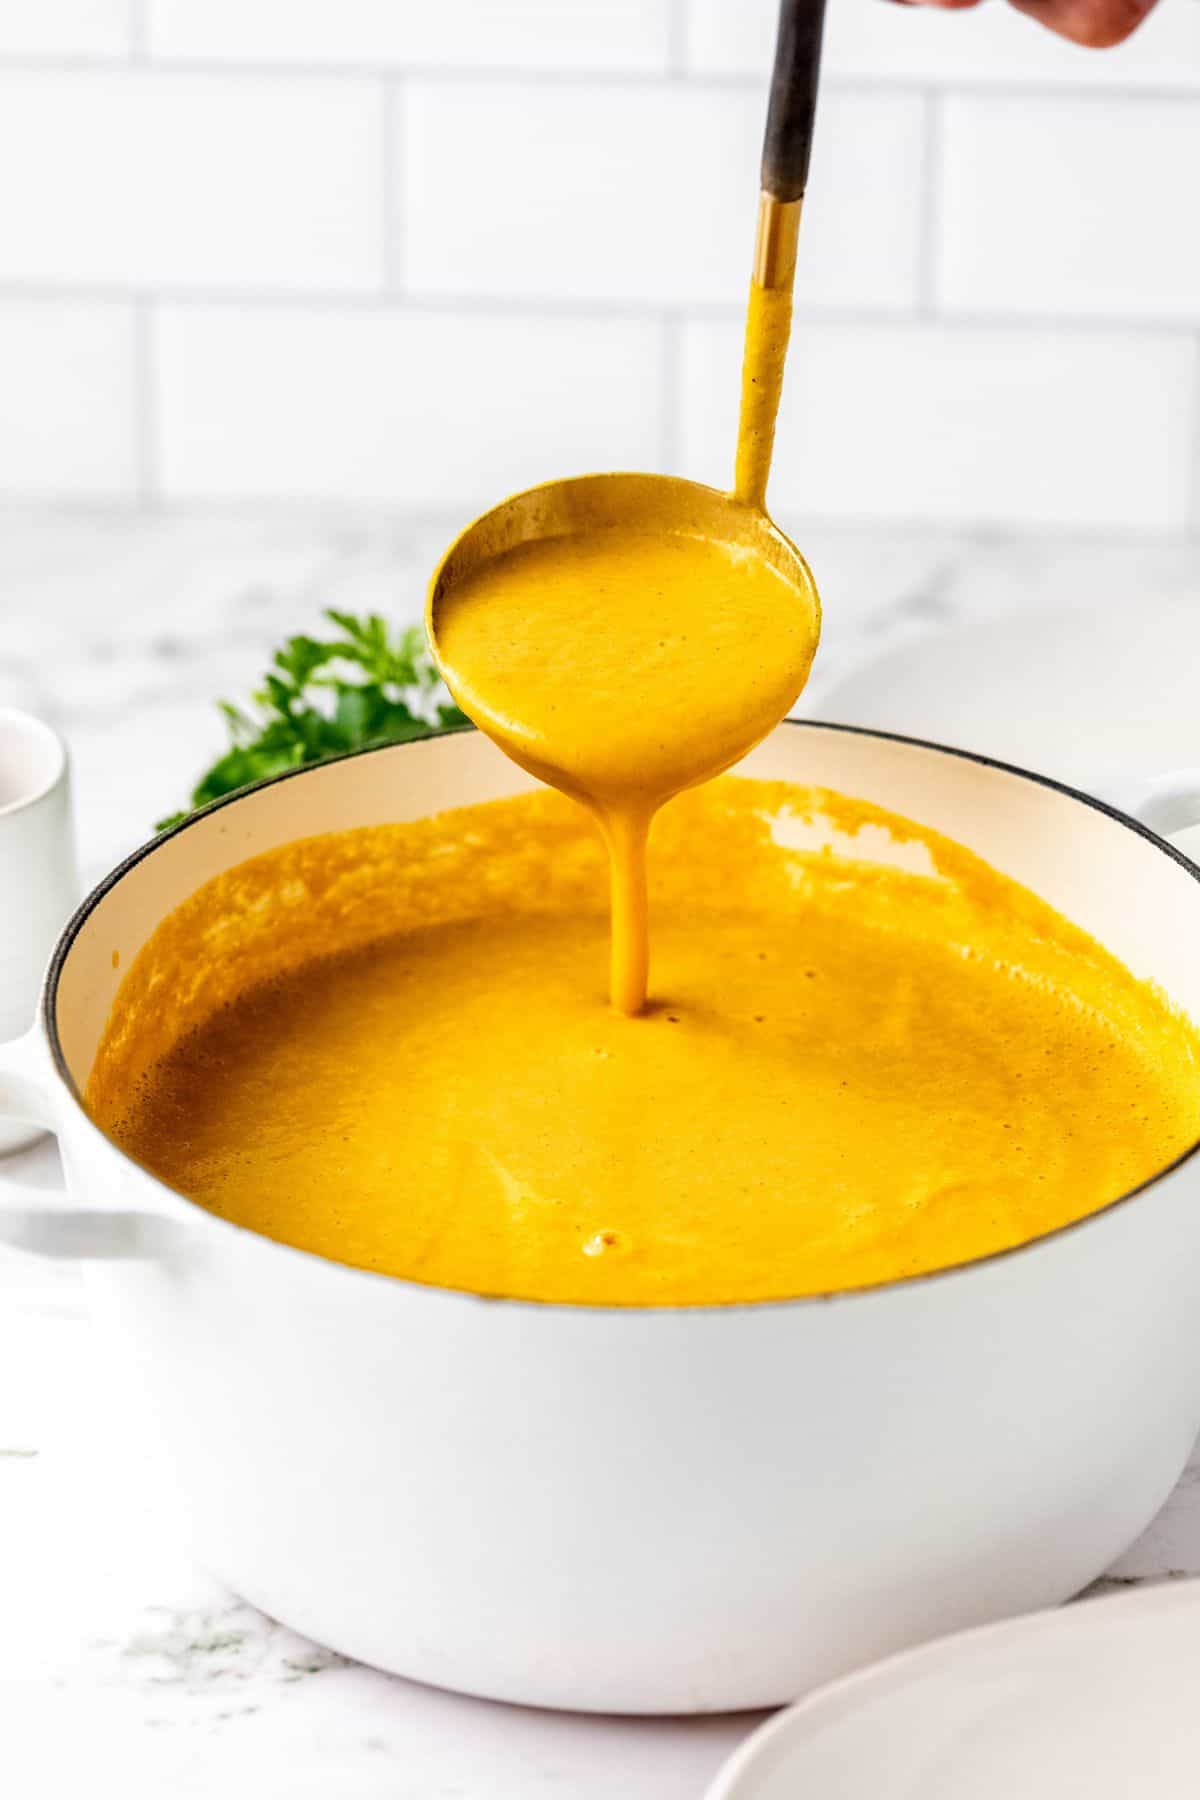 Pumpkin Soup Recipe - How to Make Pumpkin Soup